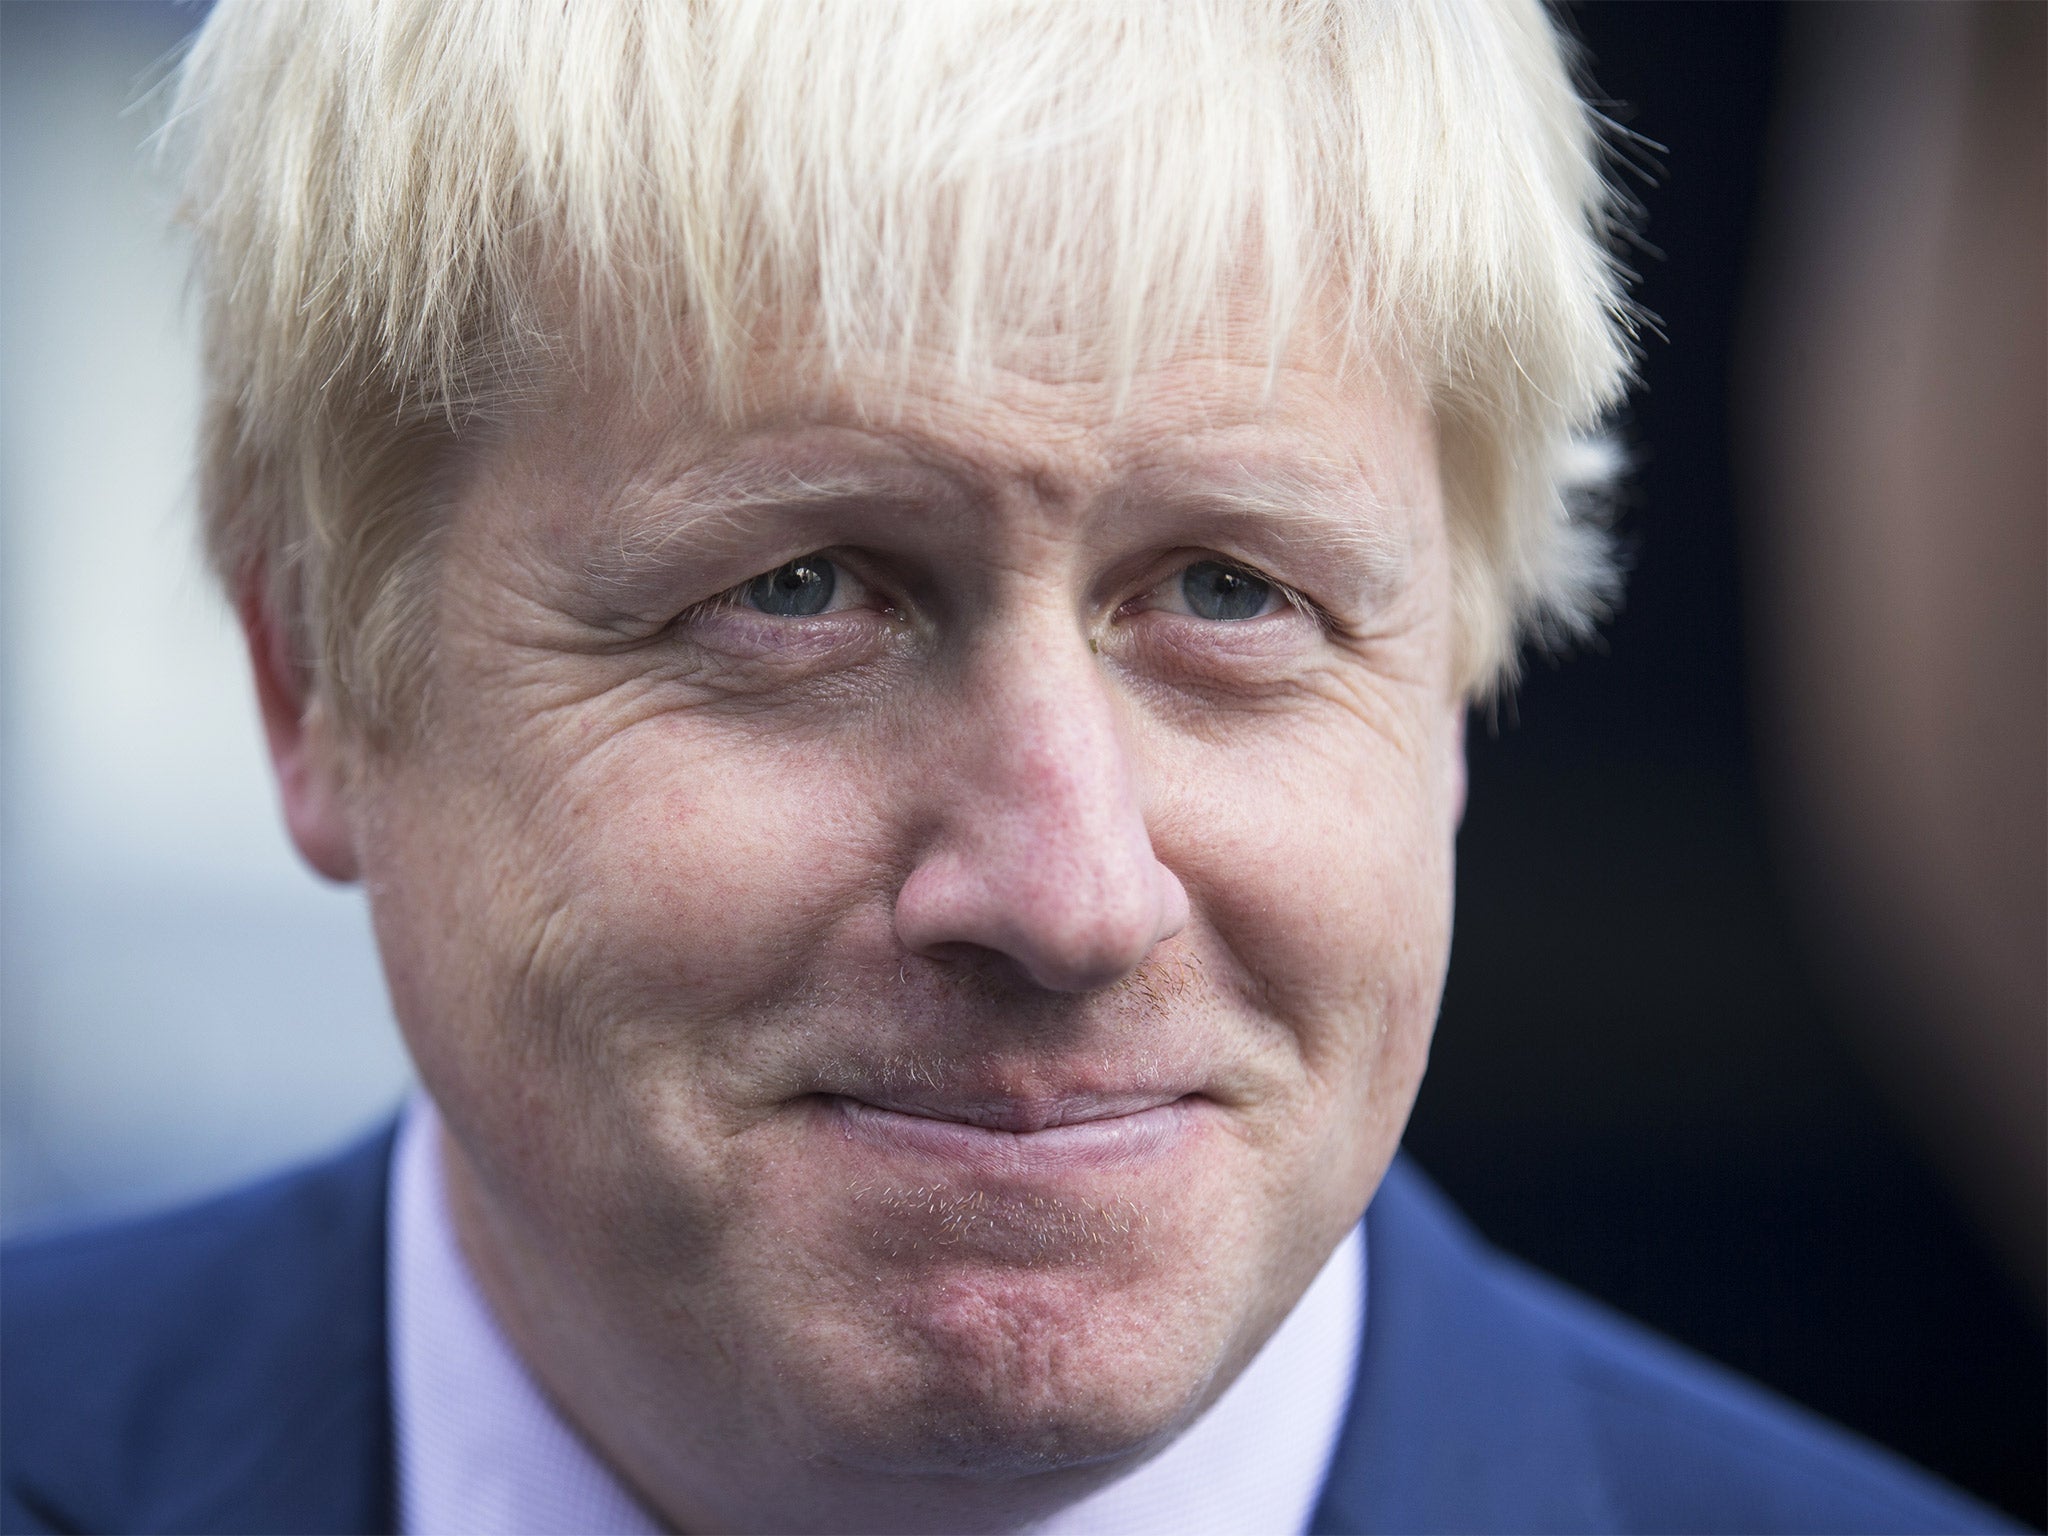 London Mayor Boris Johnson is planning to run in the 2015 general election